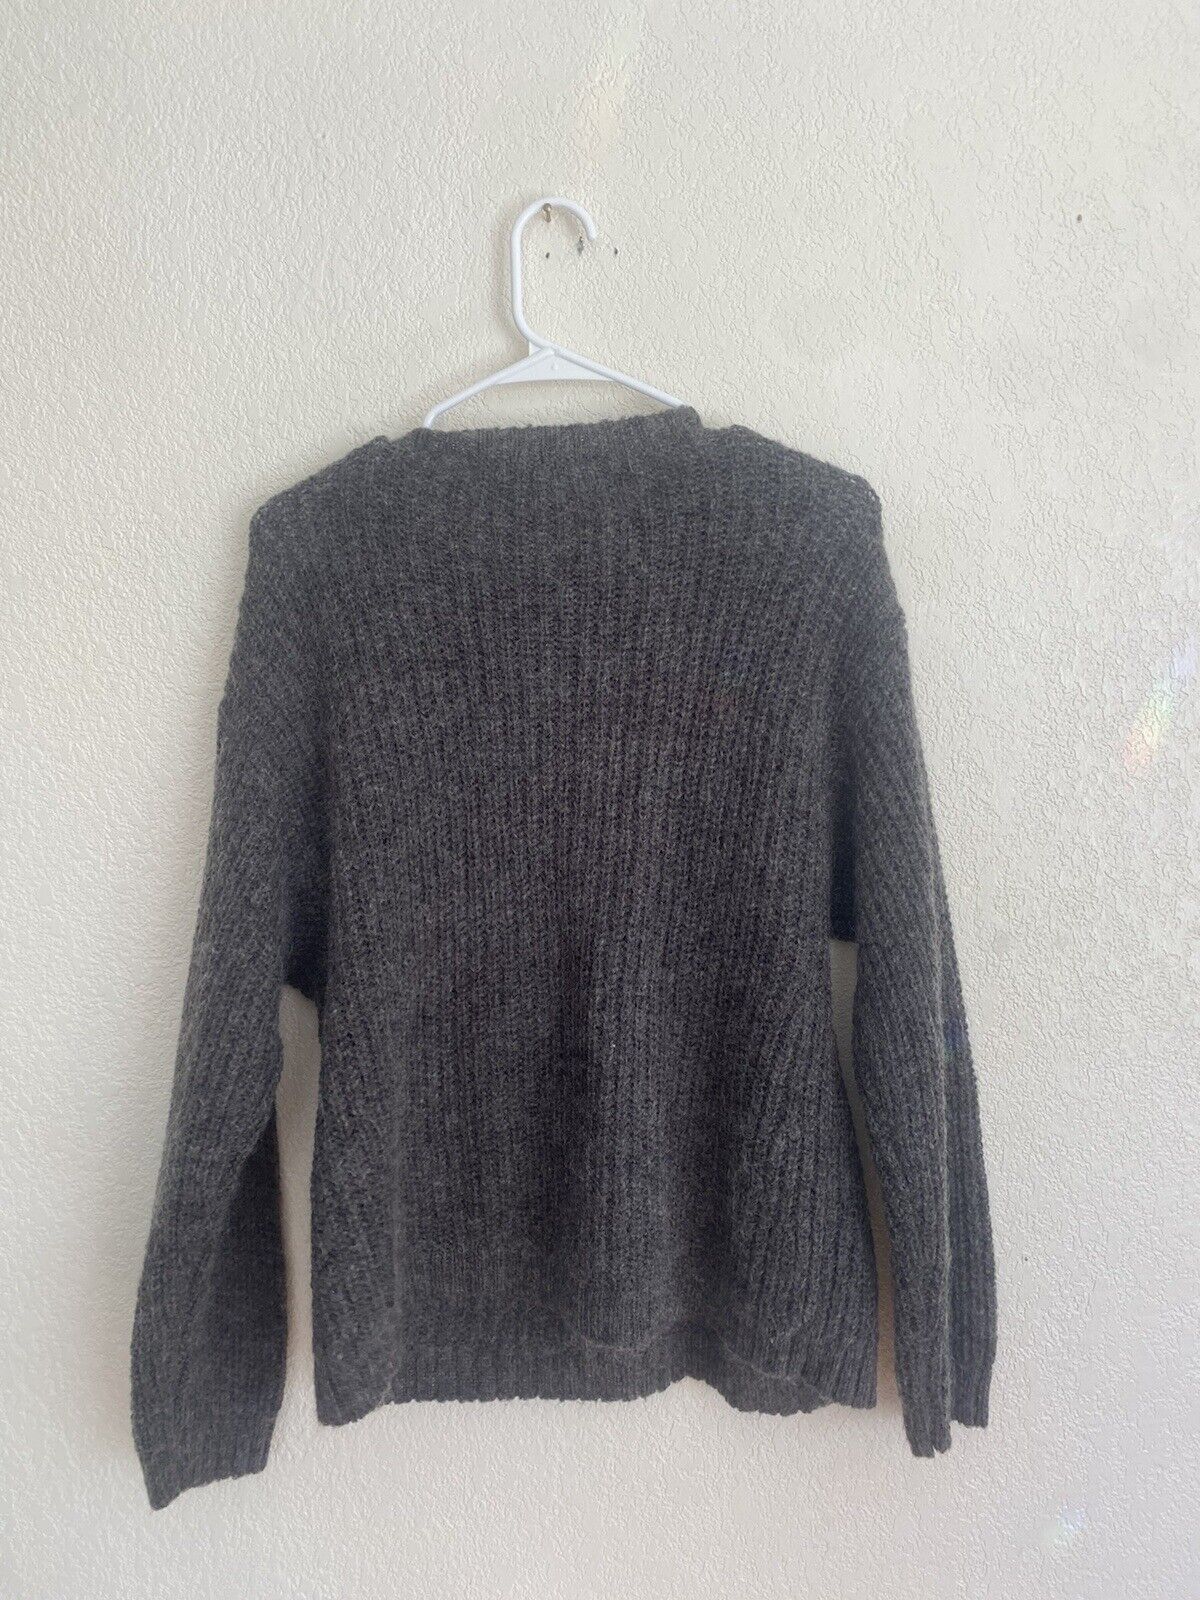 Gray Wool Sweater - Uniqlo - Women’s Medium # 1969